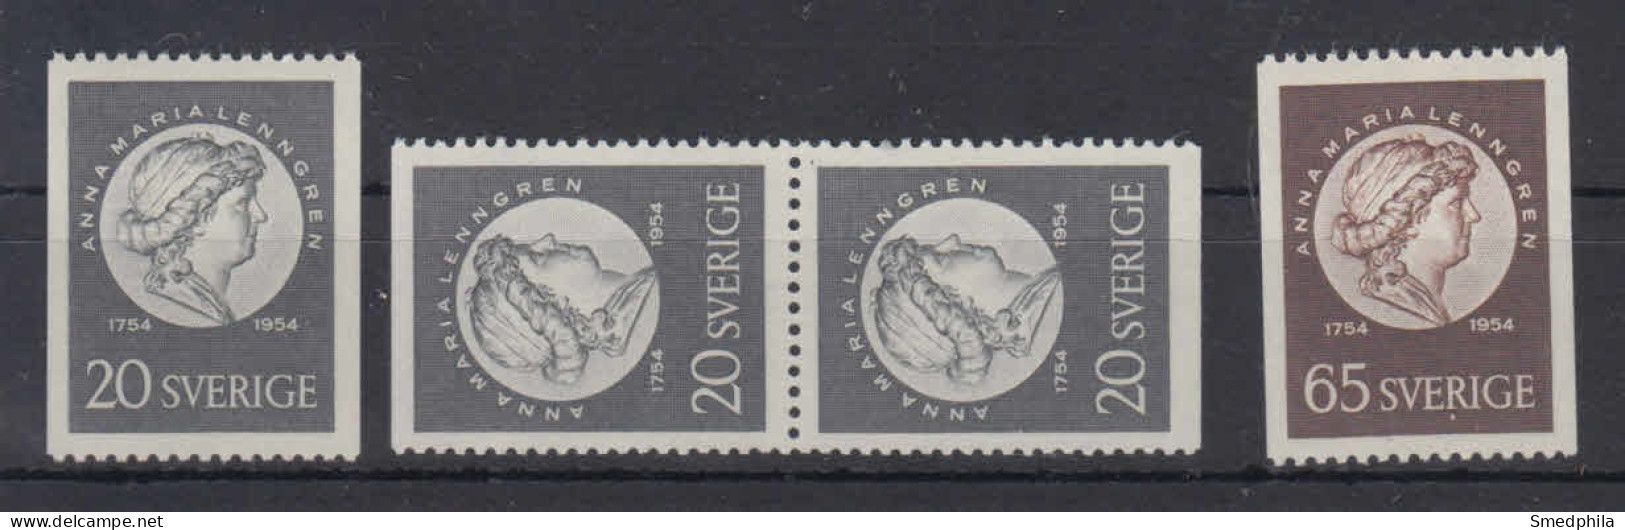 Sweden 1954 - Michel 394-395 MNH ** - Unused Stamps